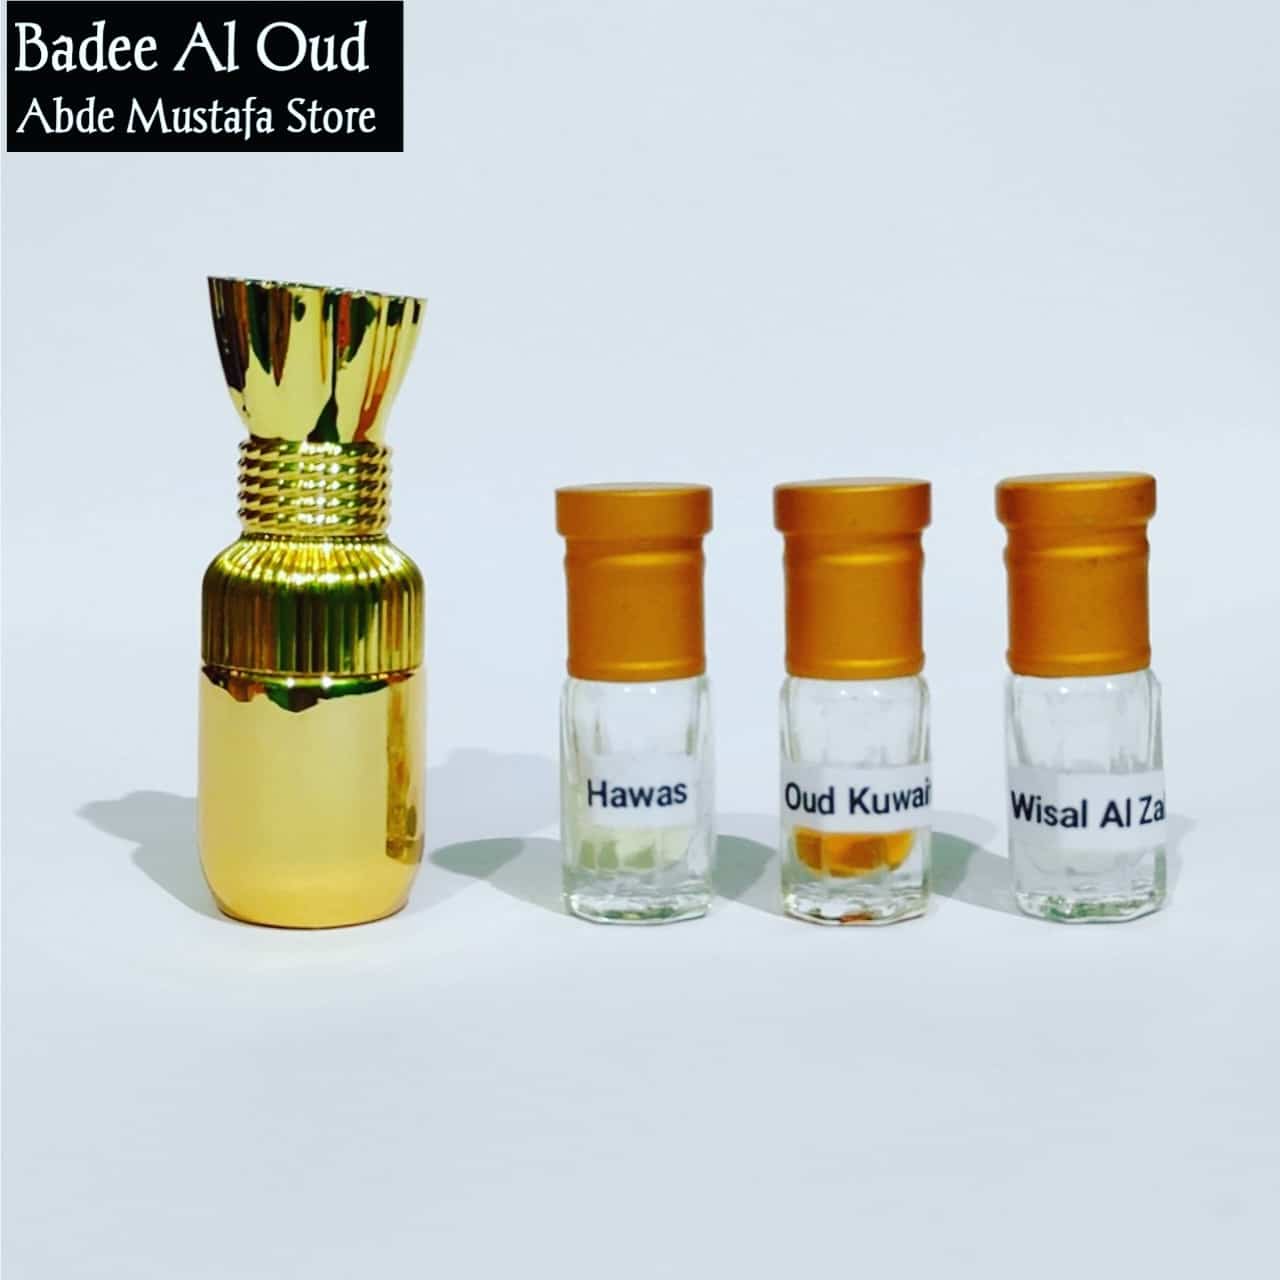 Badee Al Oud Best And Premium Fragrance By Abde Mustafa Store